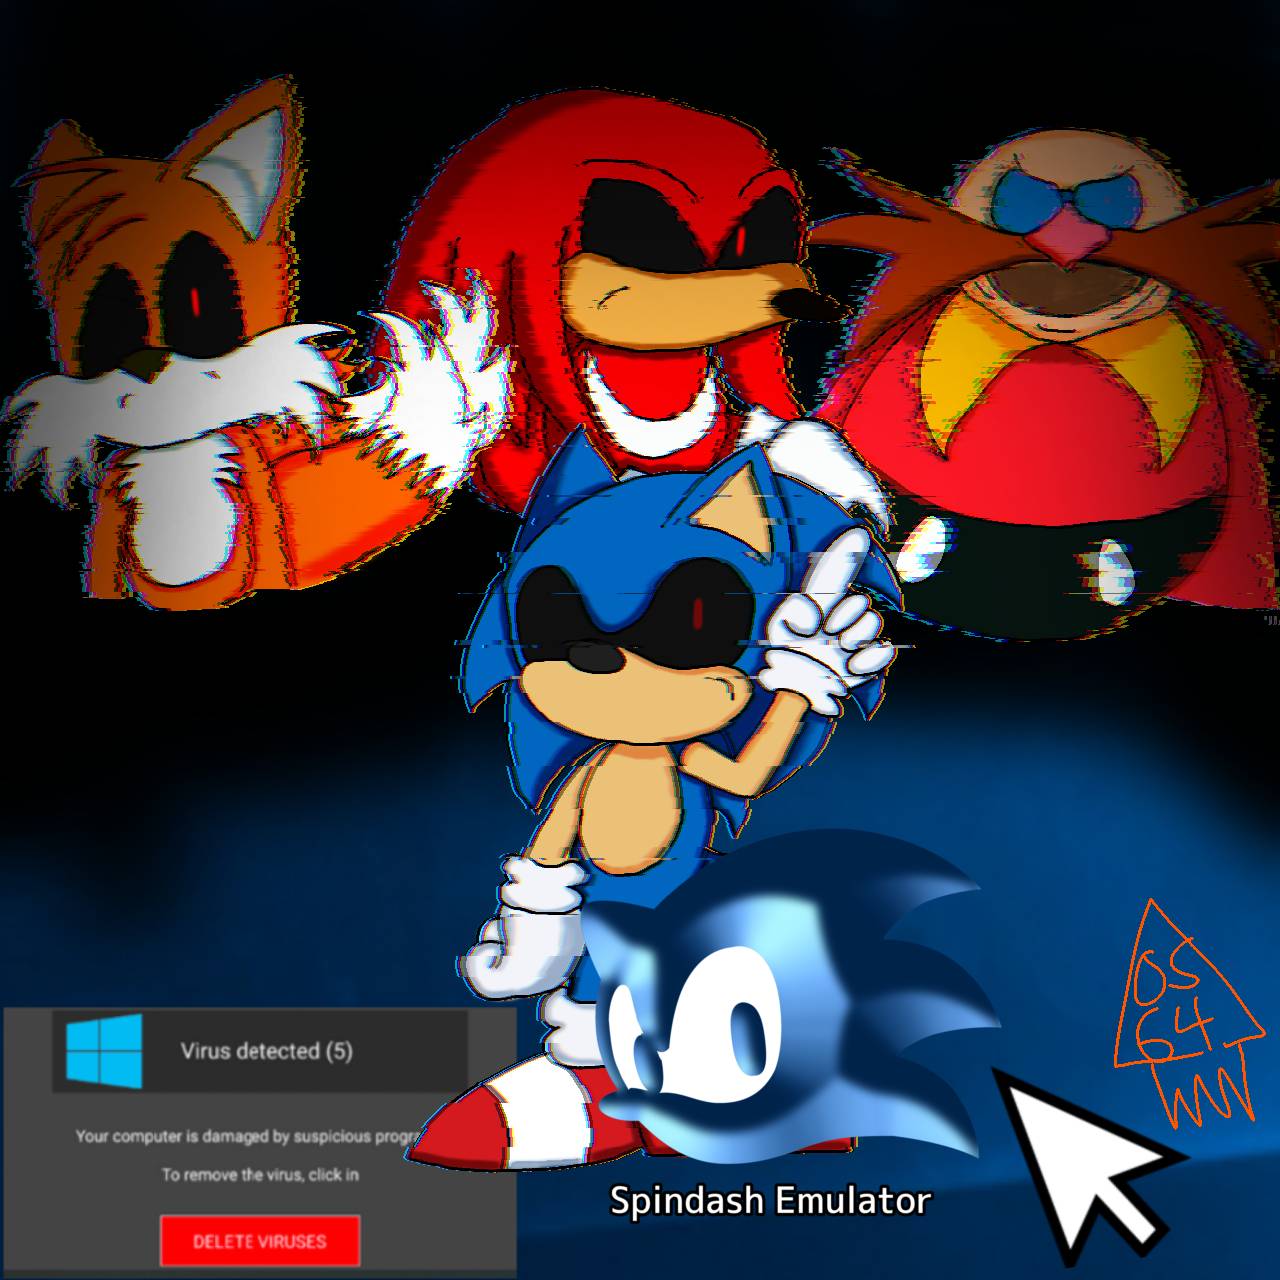 Making an Oc/alternate version of Sonic.exe never caught my eye